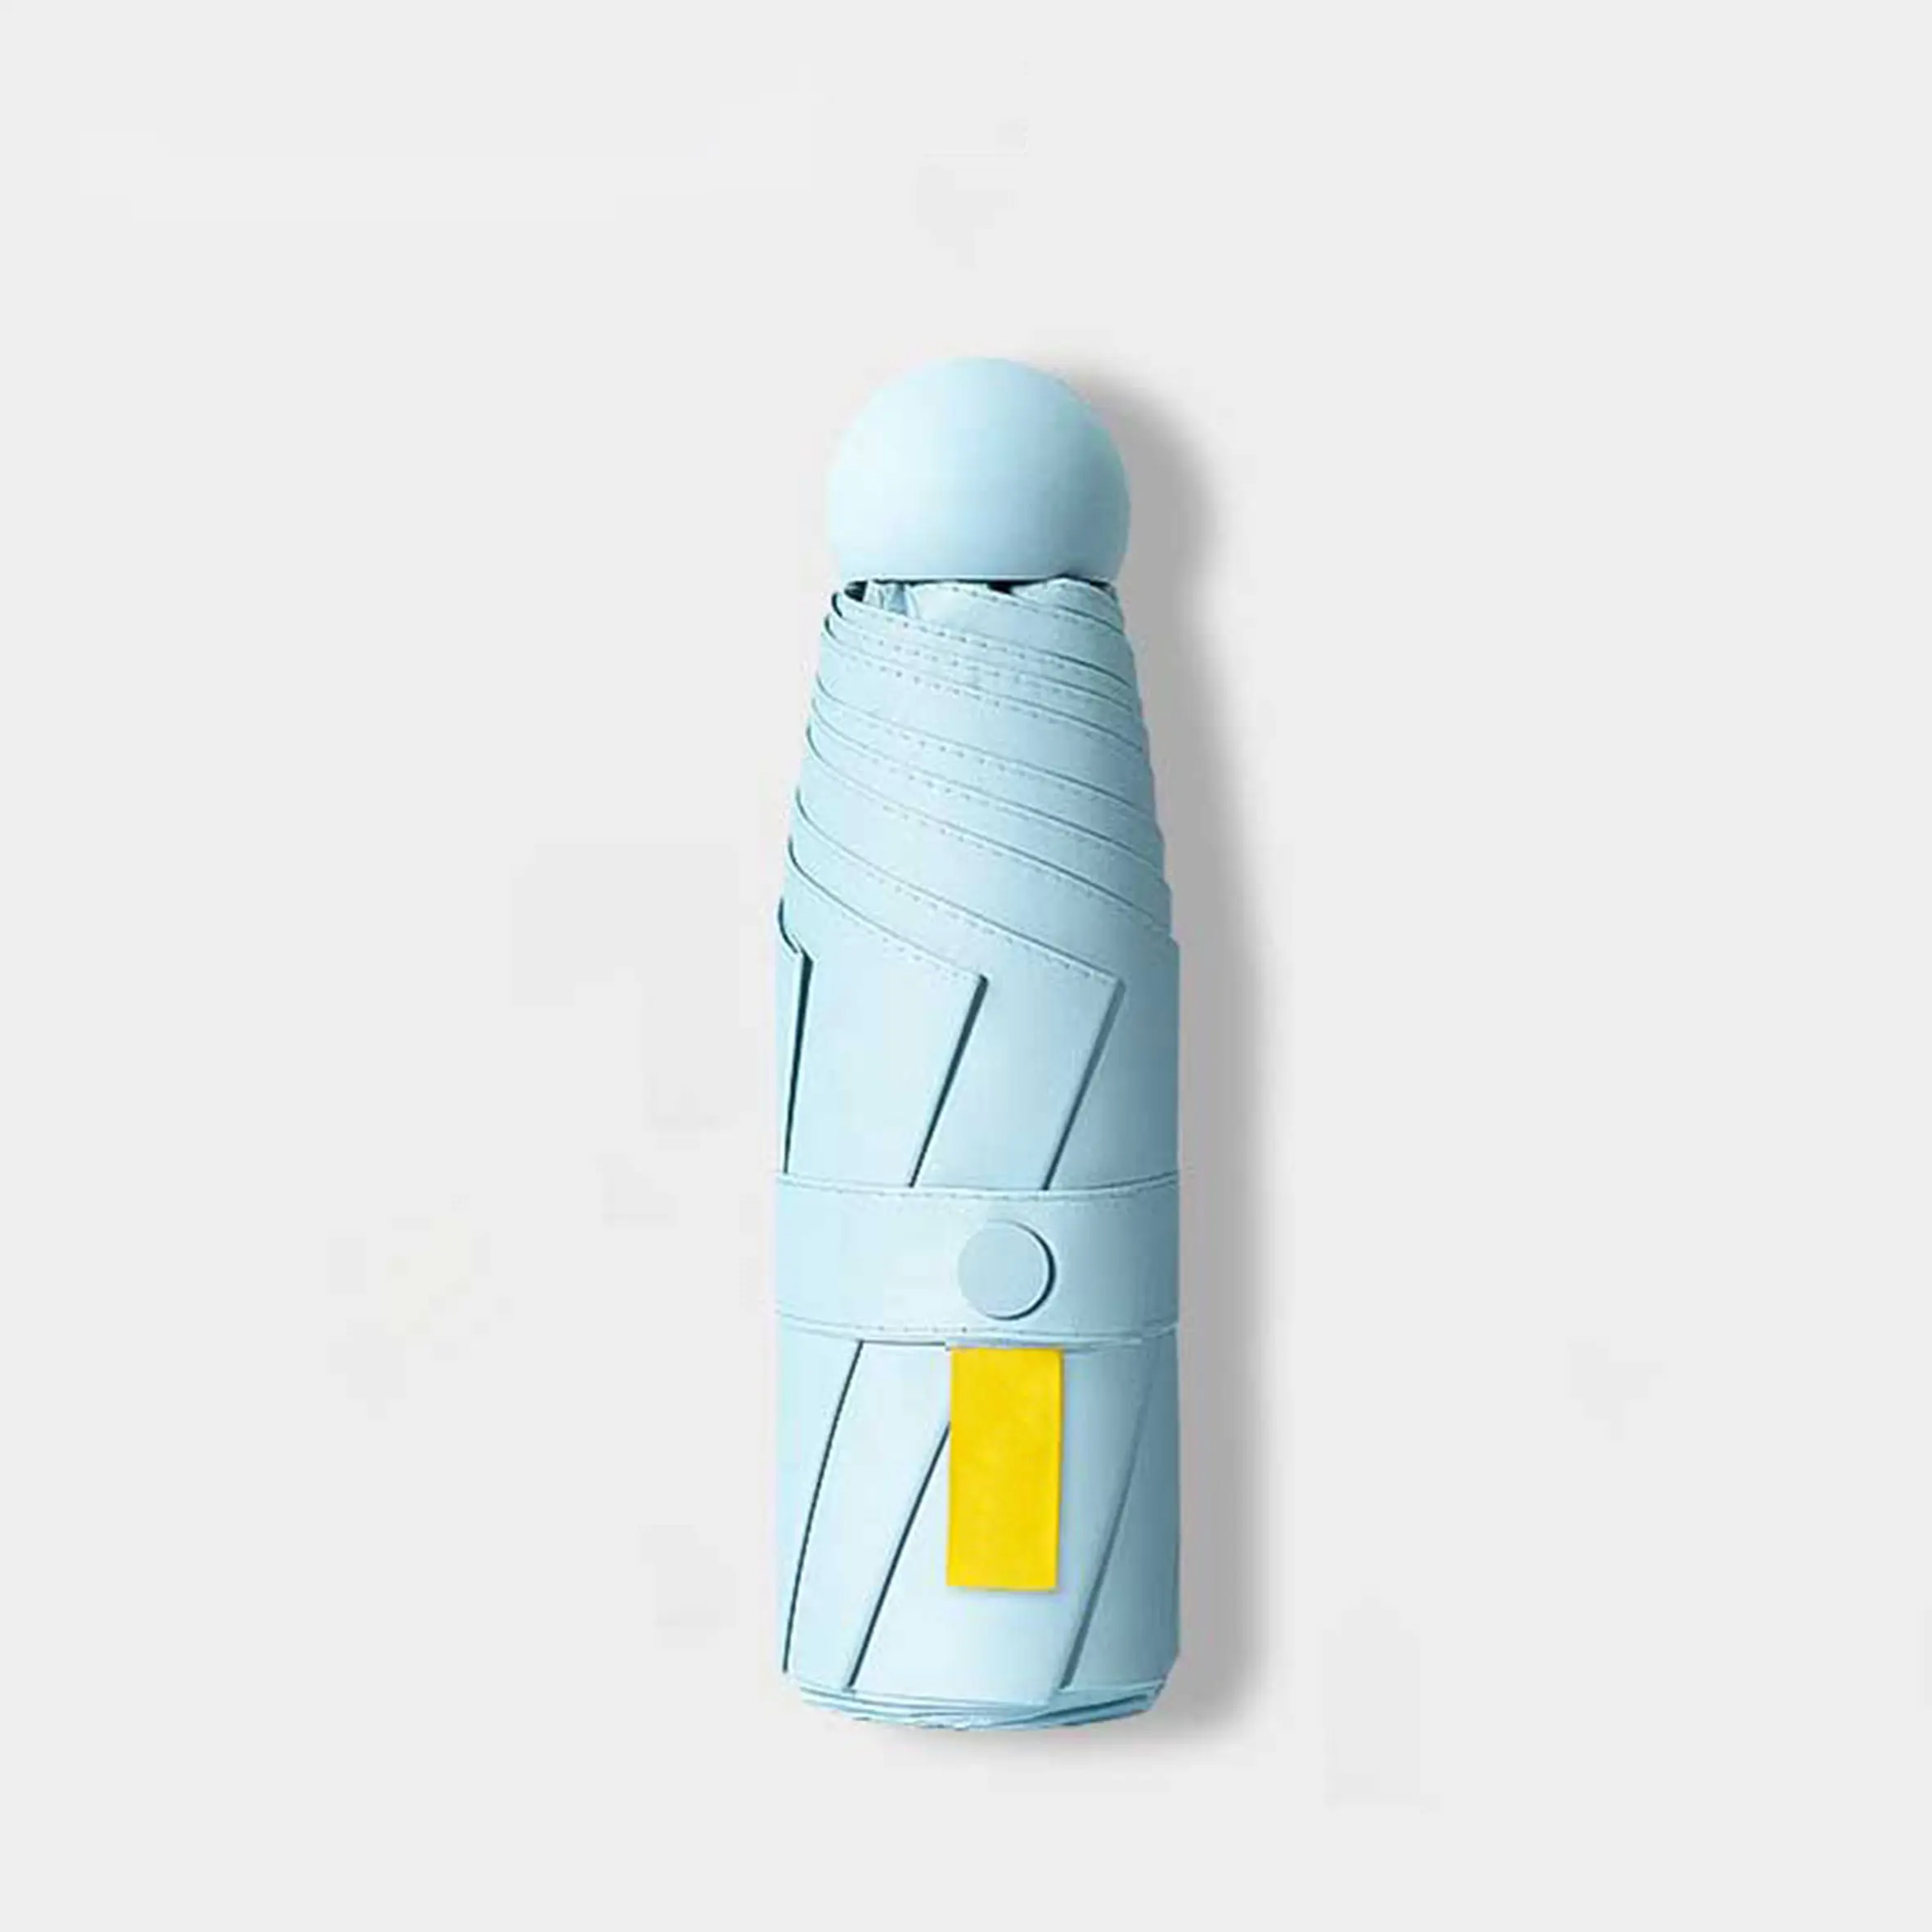 Viajes al aire libre chica regalo plegable Mini blanco portátil al por mayor personalizado, logotipo paraguas mujeres cápsula bolsillo UV plegable 6K playa/